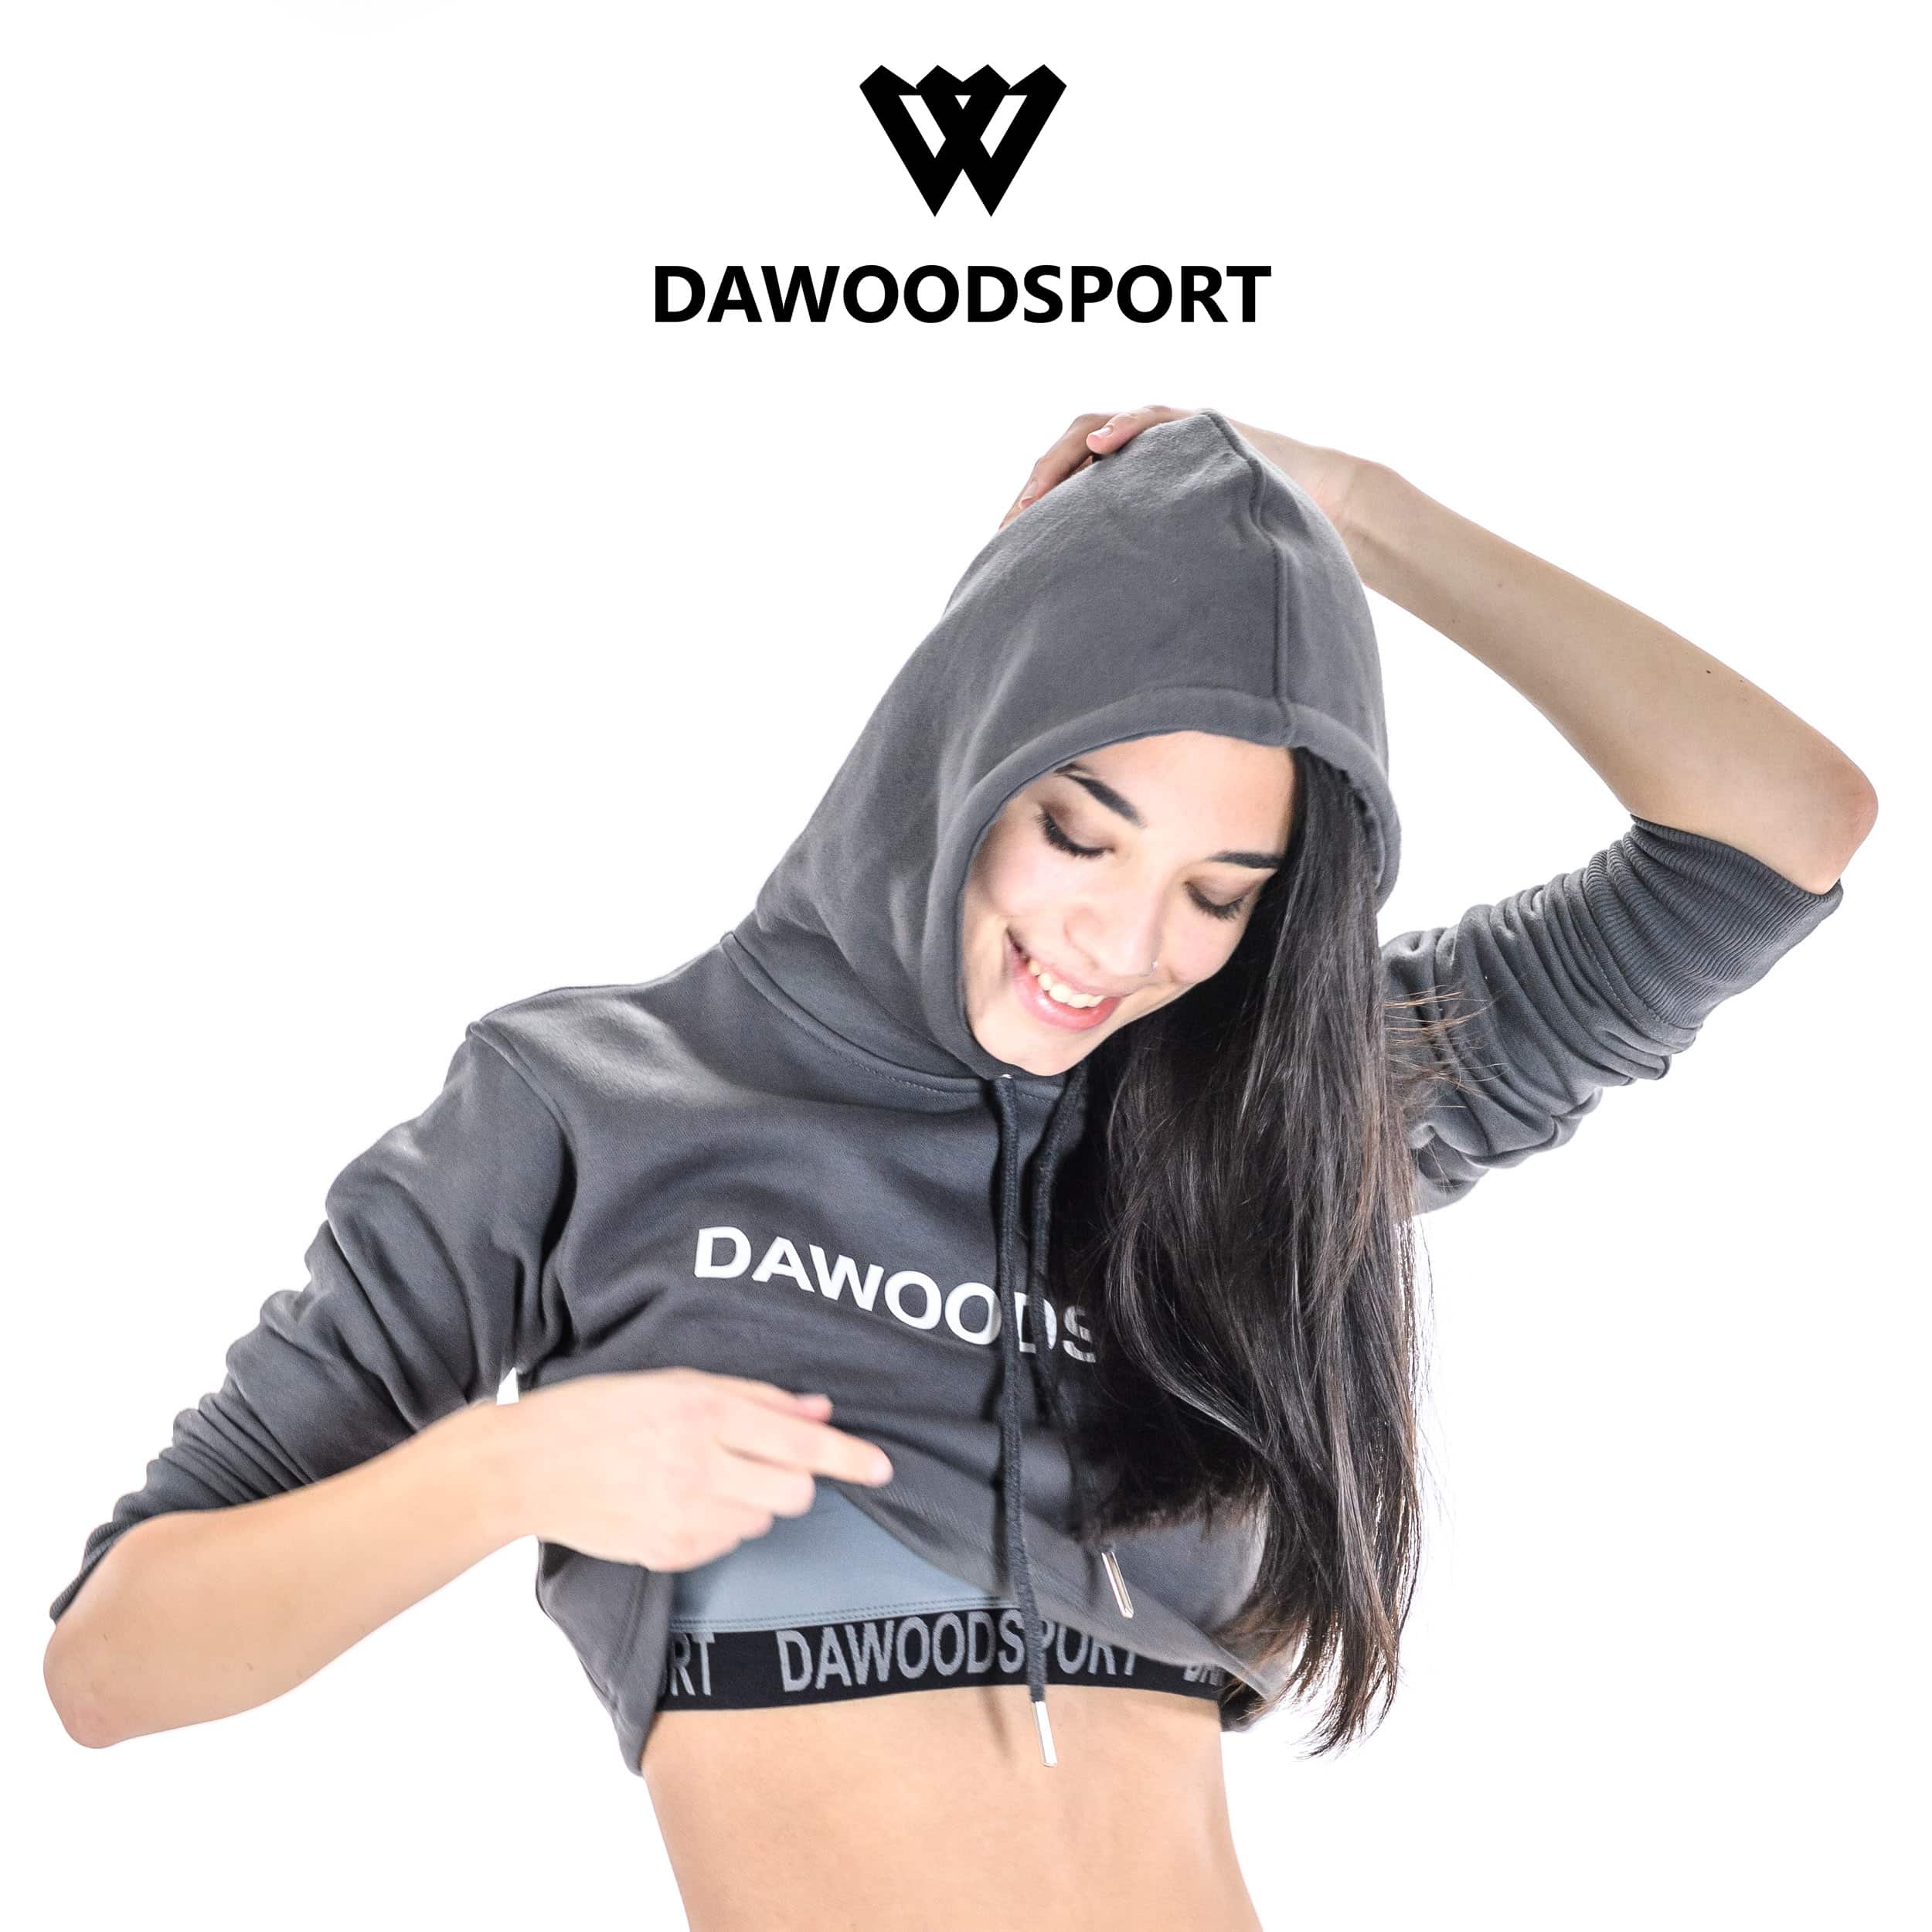 Dawoodsport